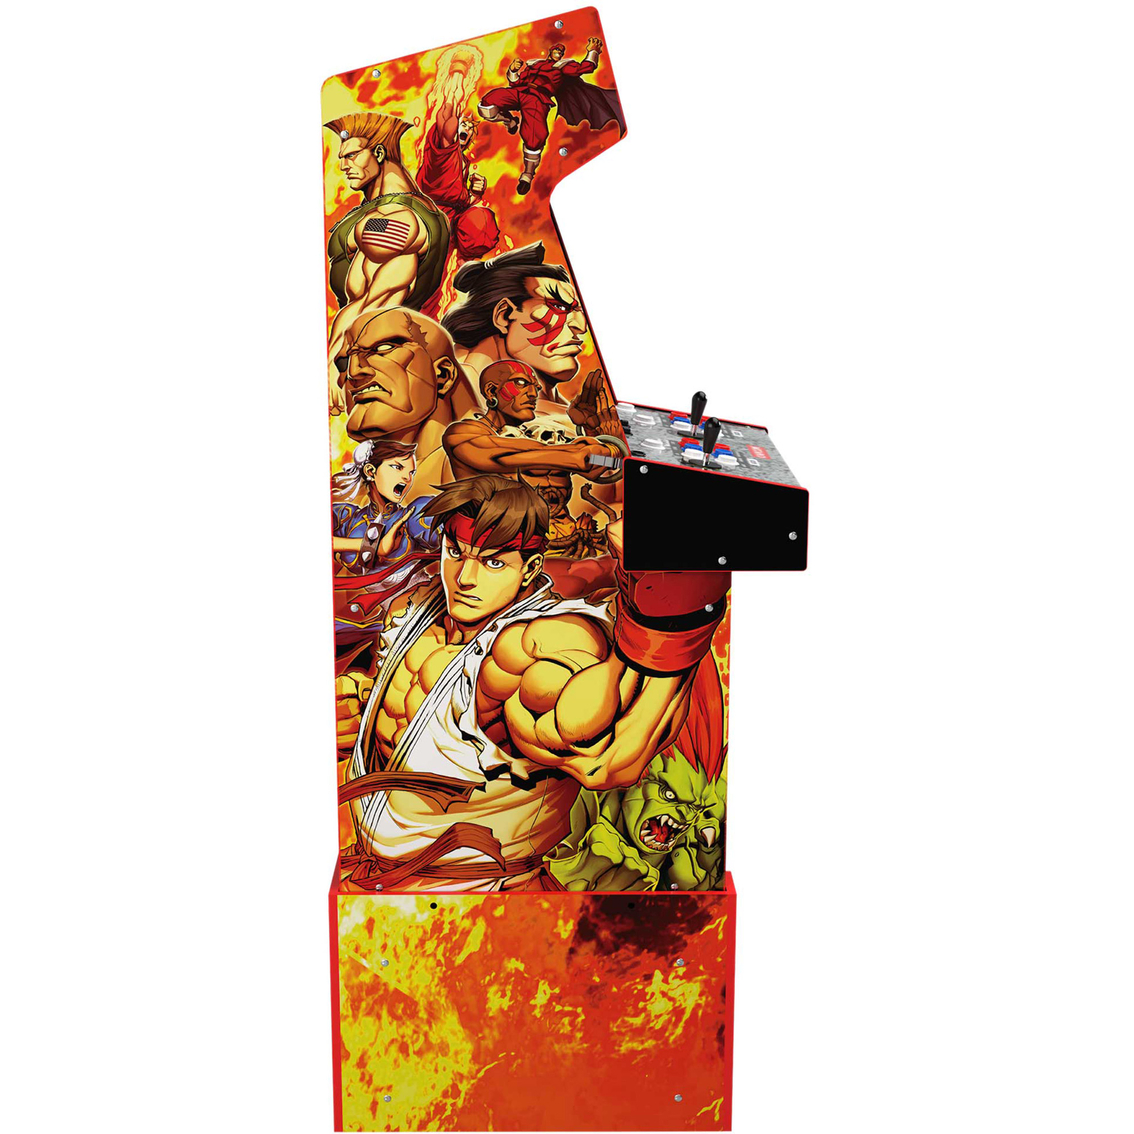 Arcade 1UP SF II Champion Turbo Capcom Legacy Home Arcade - Image 2 of 7